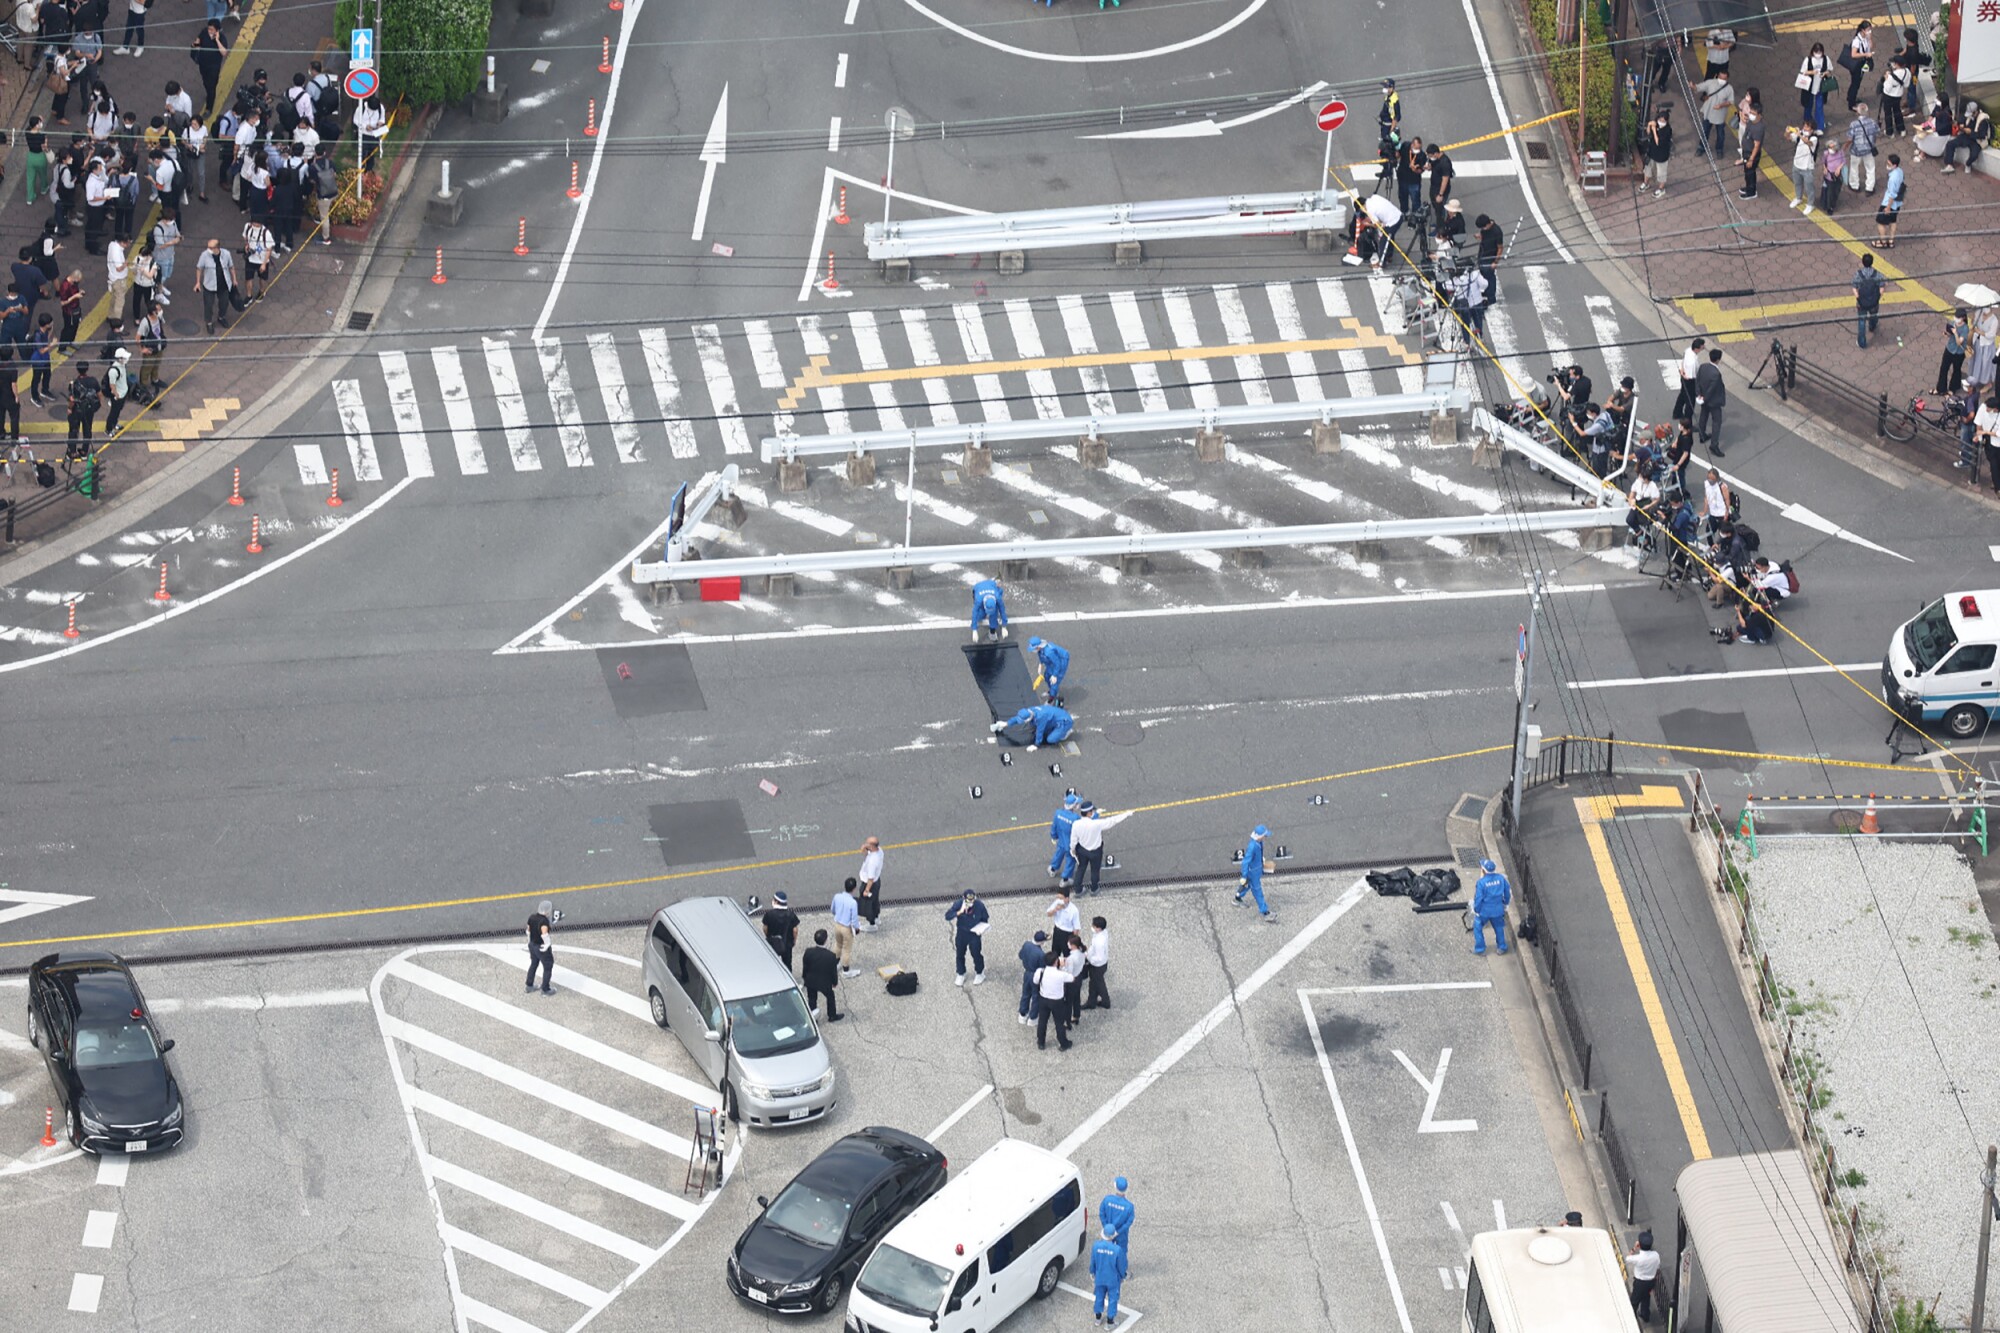 An aerial image shows police working at the scene of an incident at Kintetsu Yamato-Saidaiji Station in Nara. 